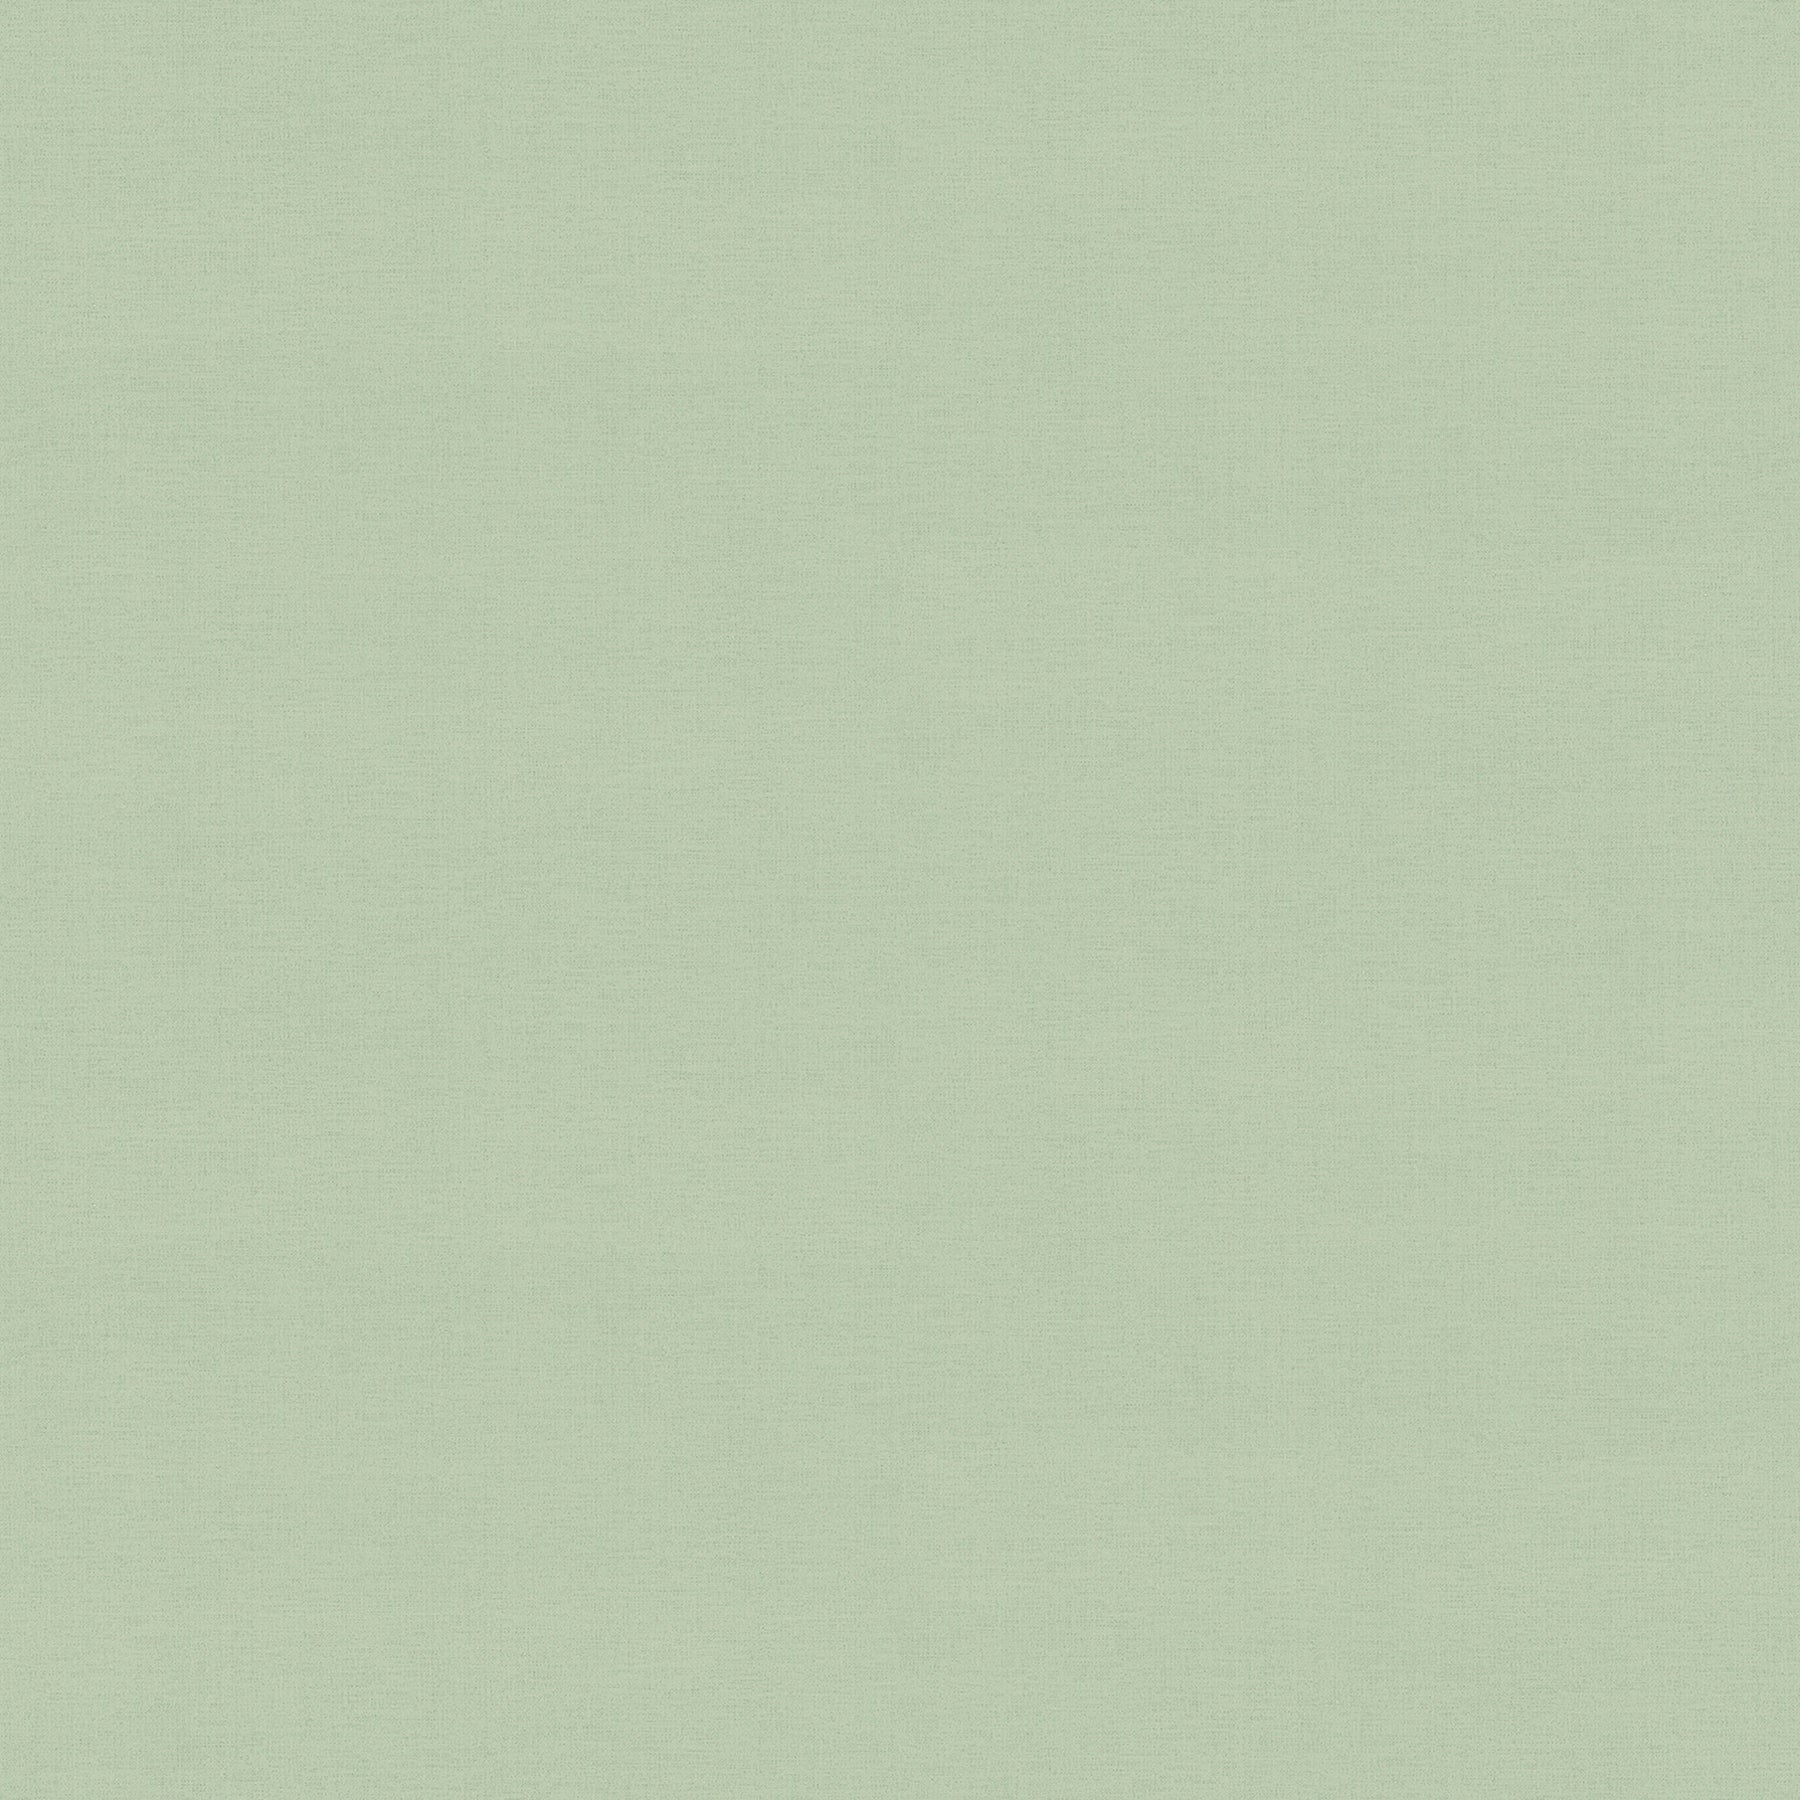 Looking 4044-37178-8 Cuba Estefan Green Distressed Texture Wallpaper Green by Advantage